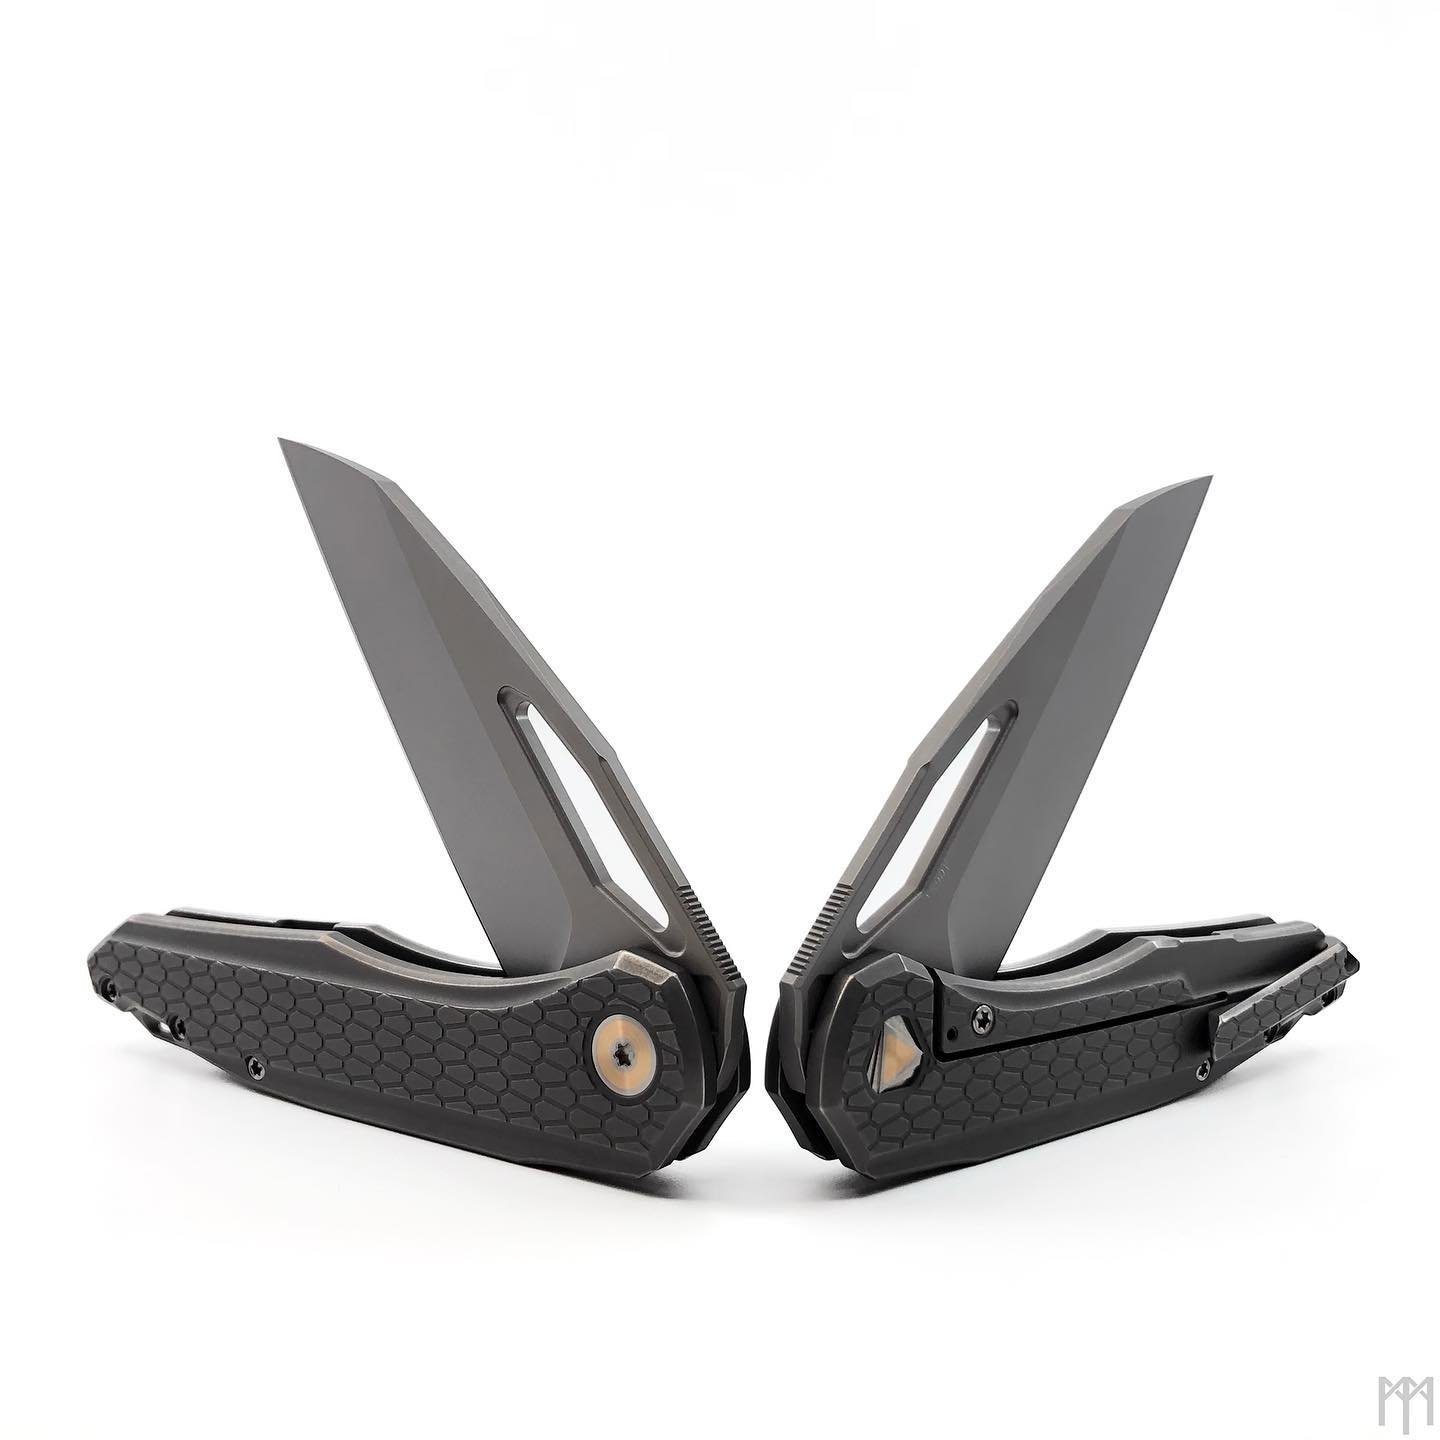 &larr; bronzed &amp; beadwashed &rarr;
.
.
.
#munroeknives #munroemetalworks #munroemade #sigil #s90v #knives #customknives